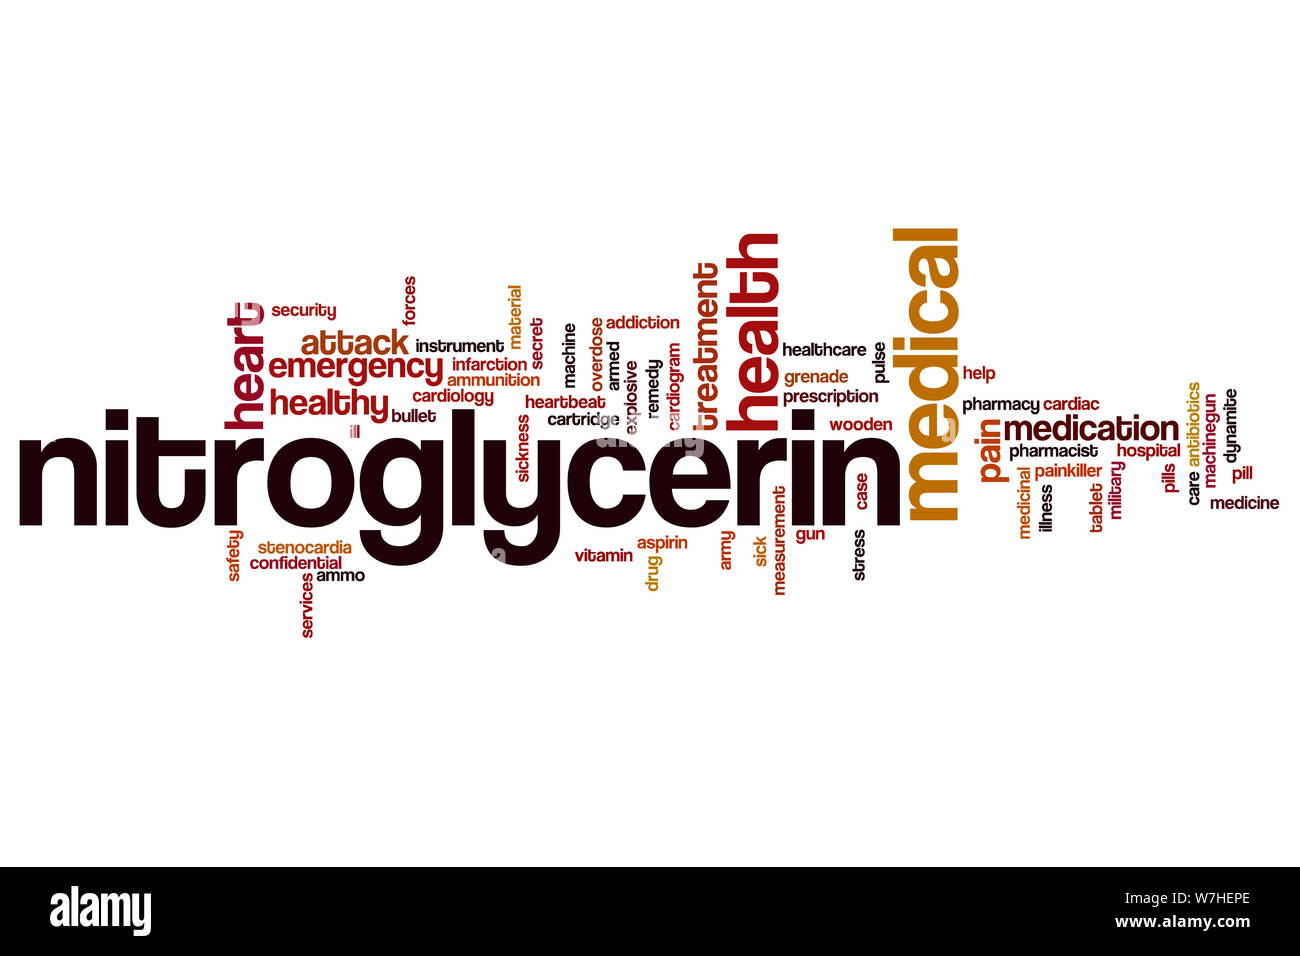 Nitroglycerin word cloud concept Stock Photo